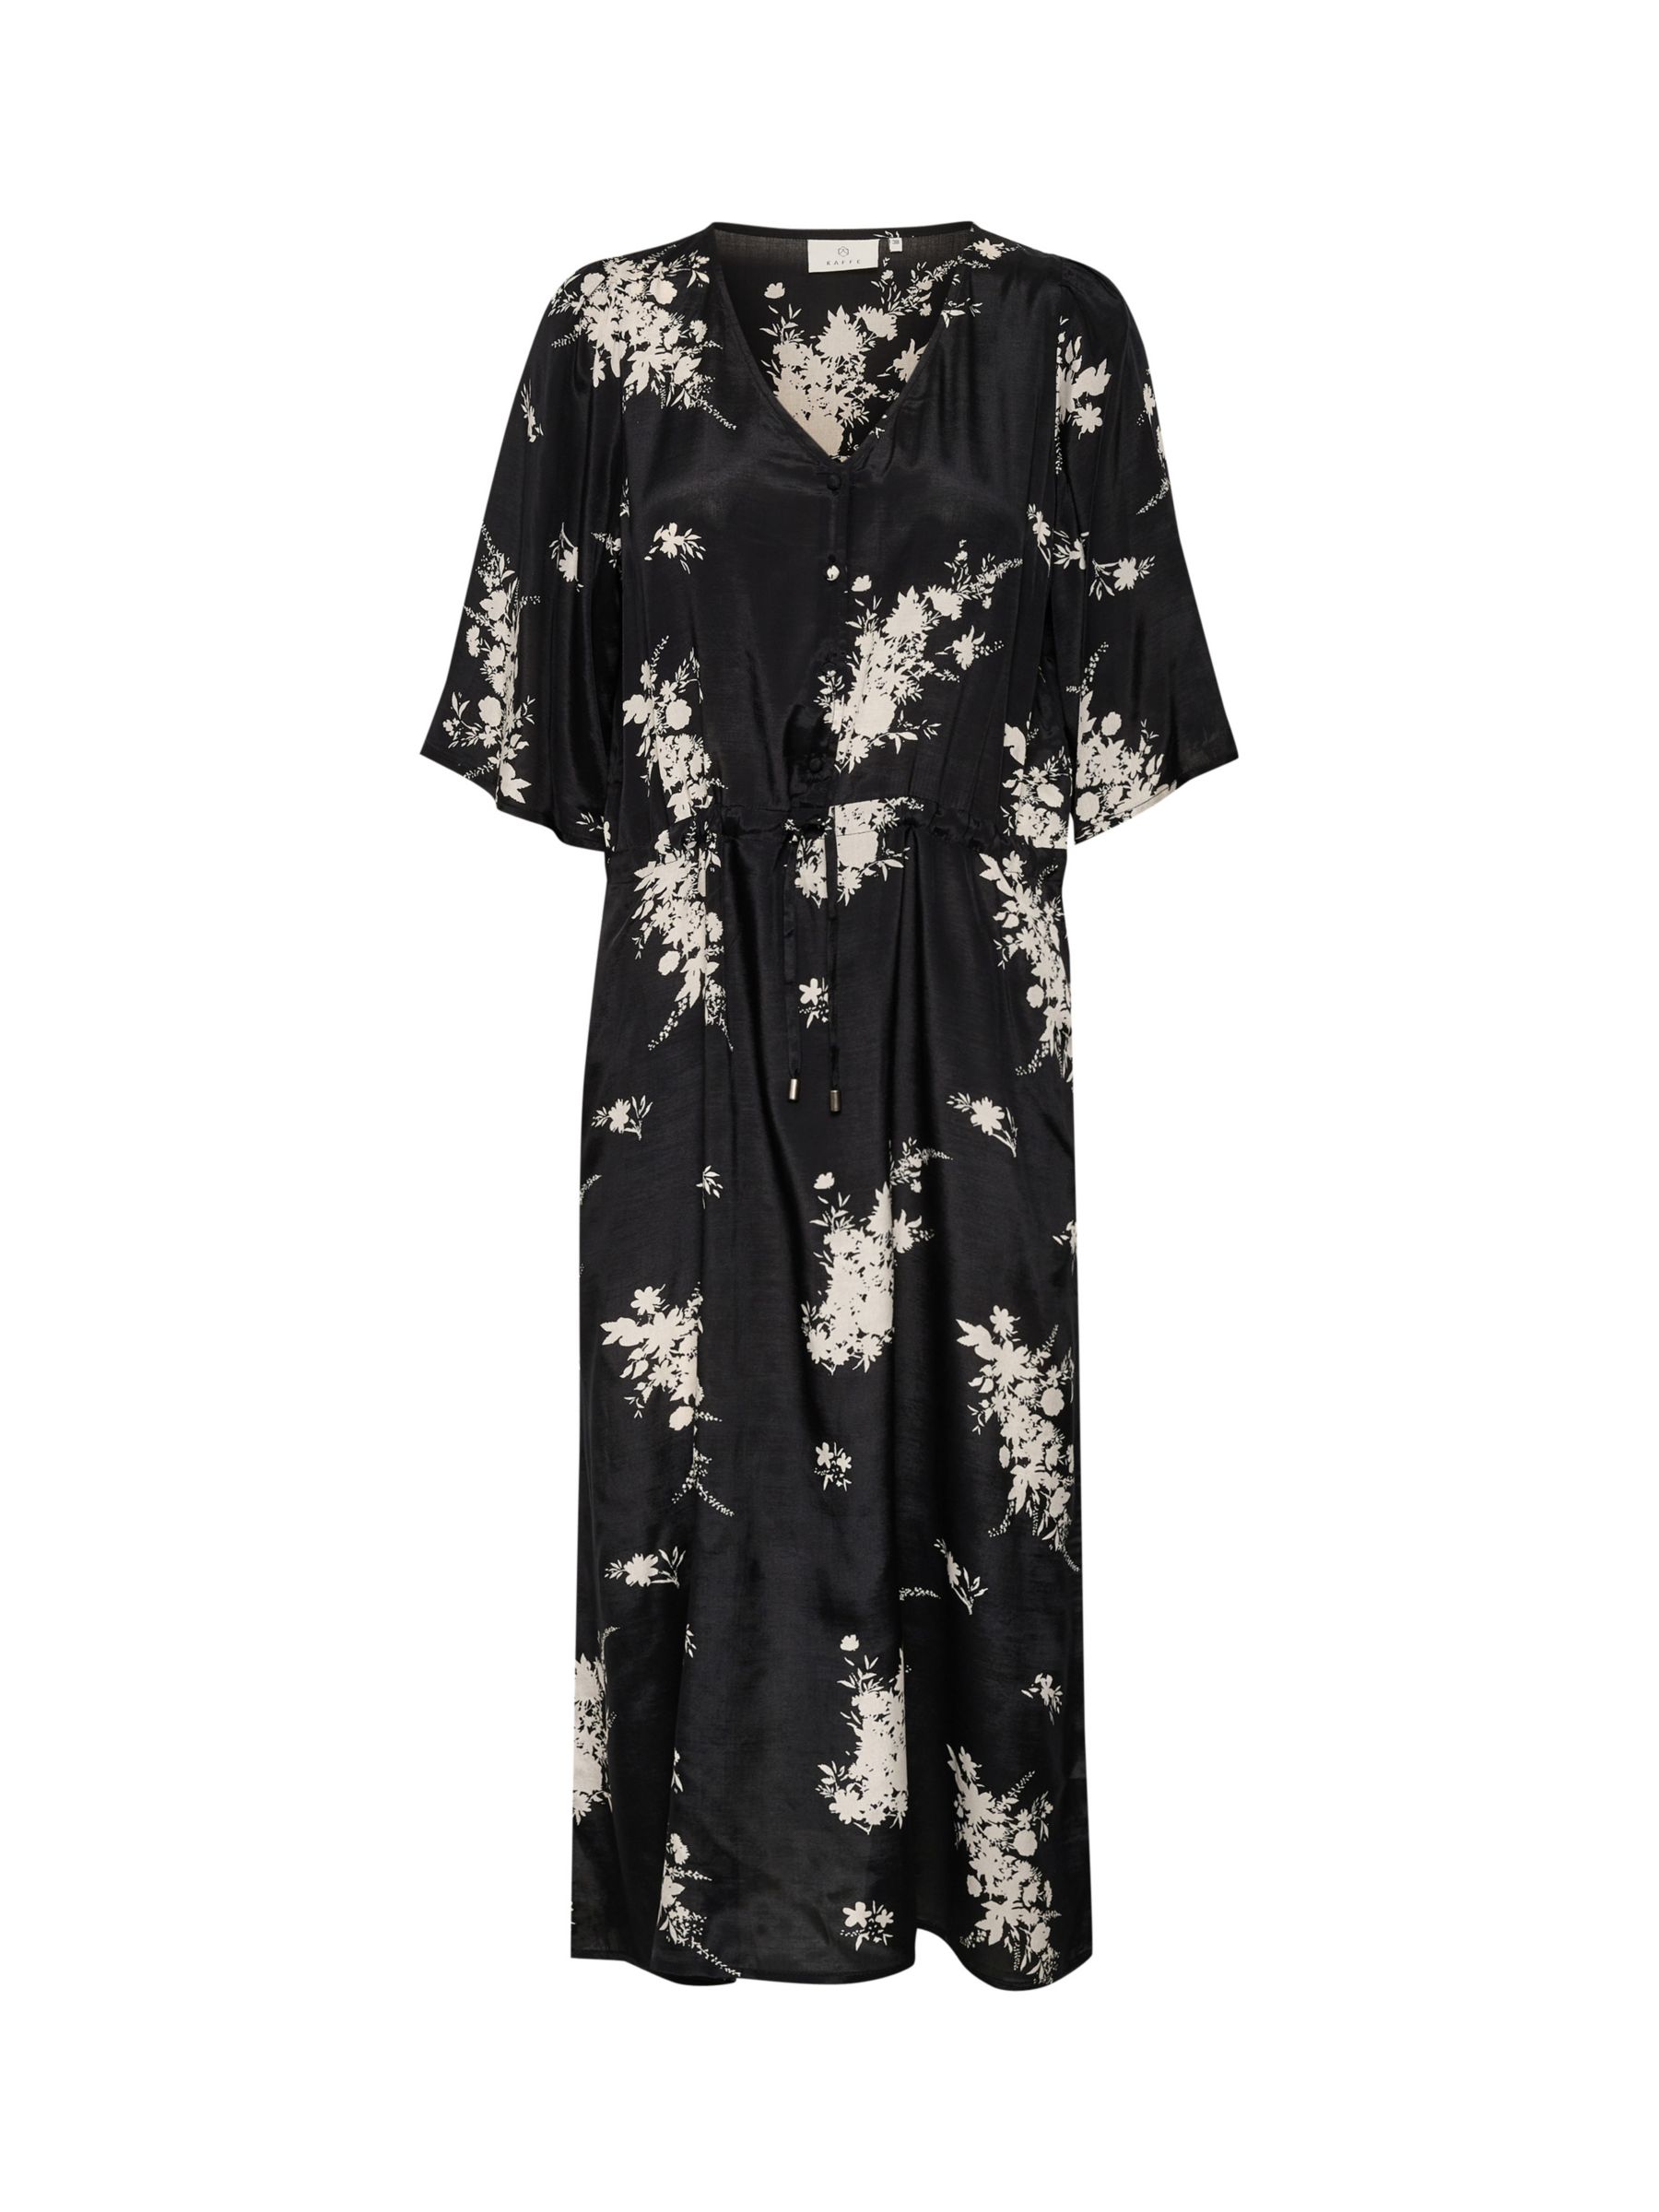 KAFFE Gilla Floral Midi Dress, Black/Antique, 8